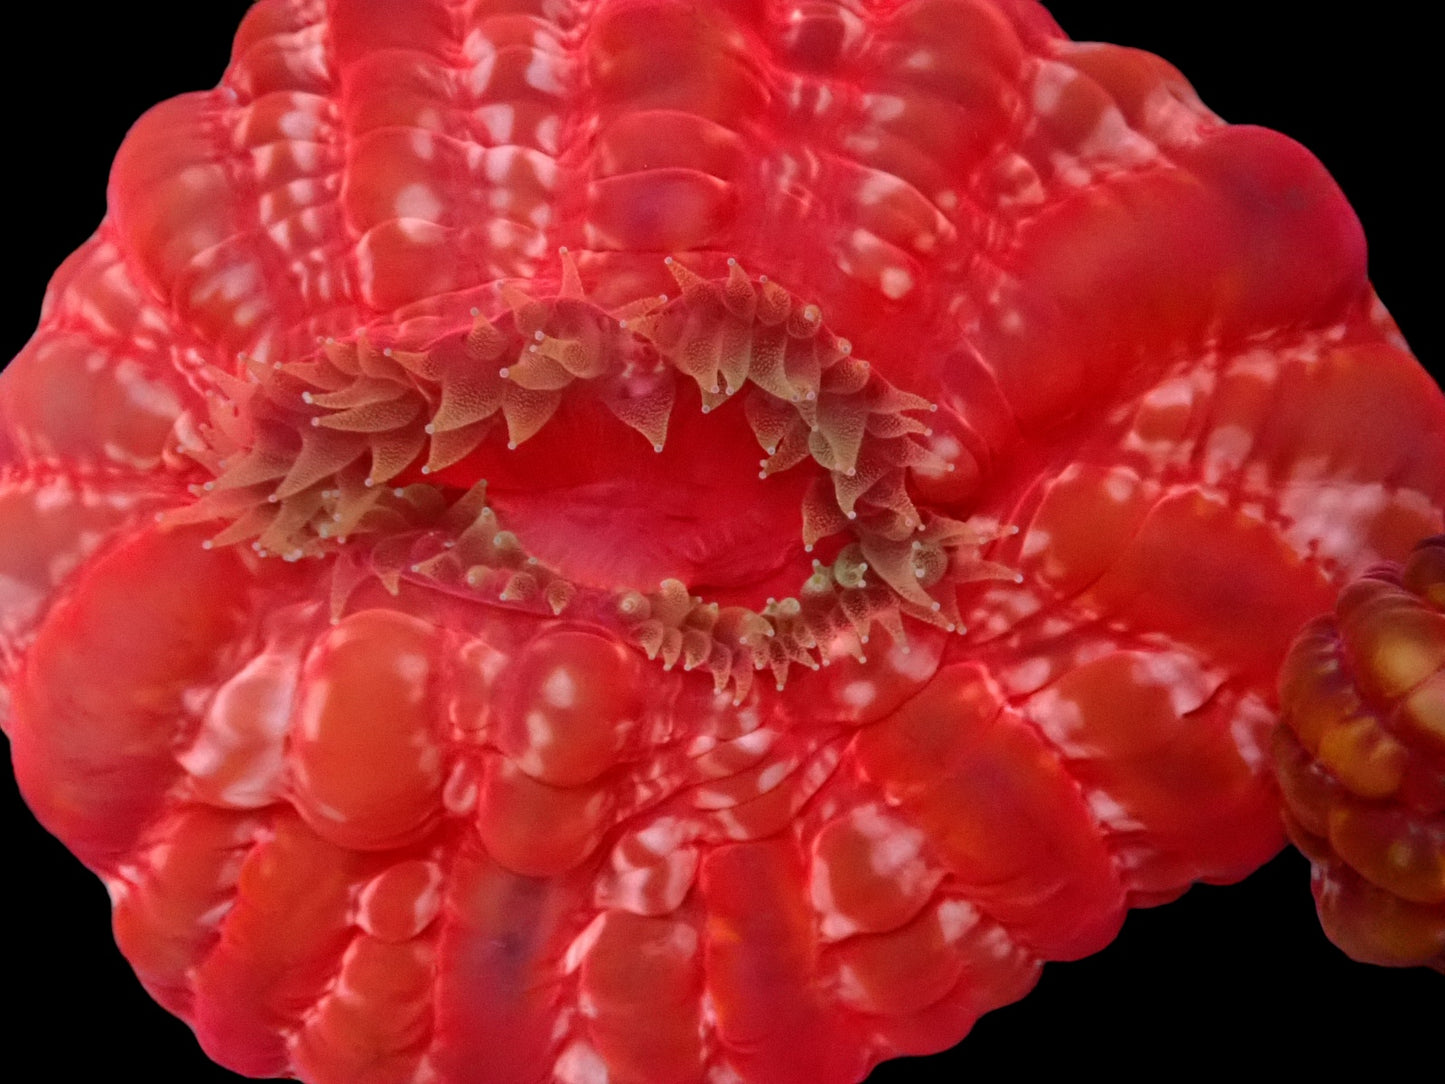 Cynarina lacrymalis - ultra bright red/green button coral 1